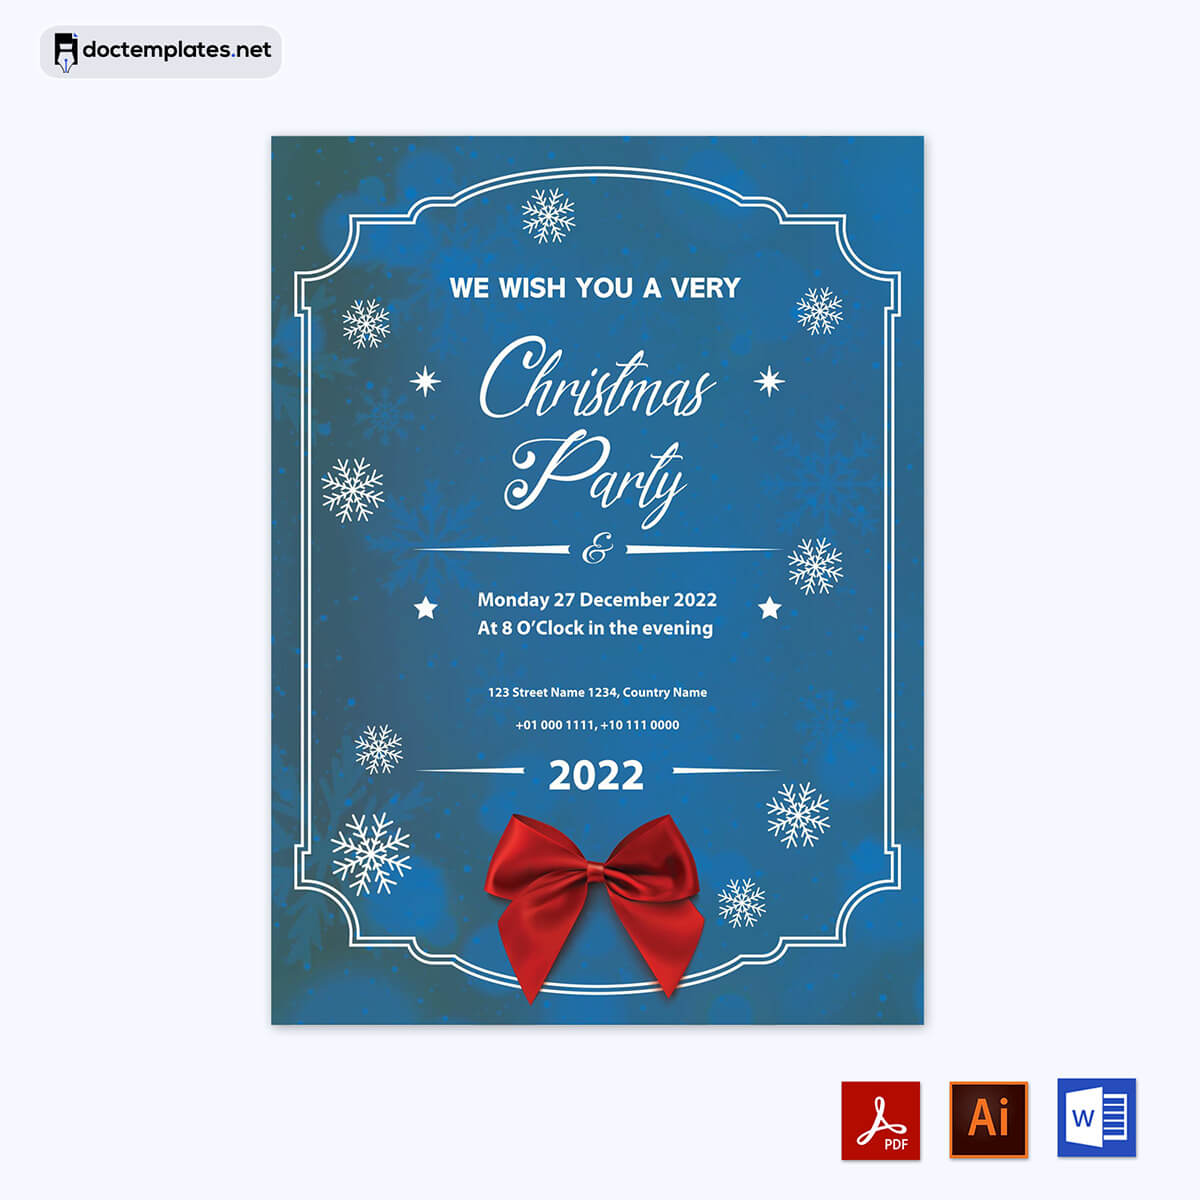 Image of Christmas card design
Christmas card design
